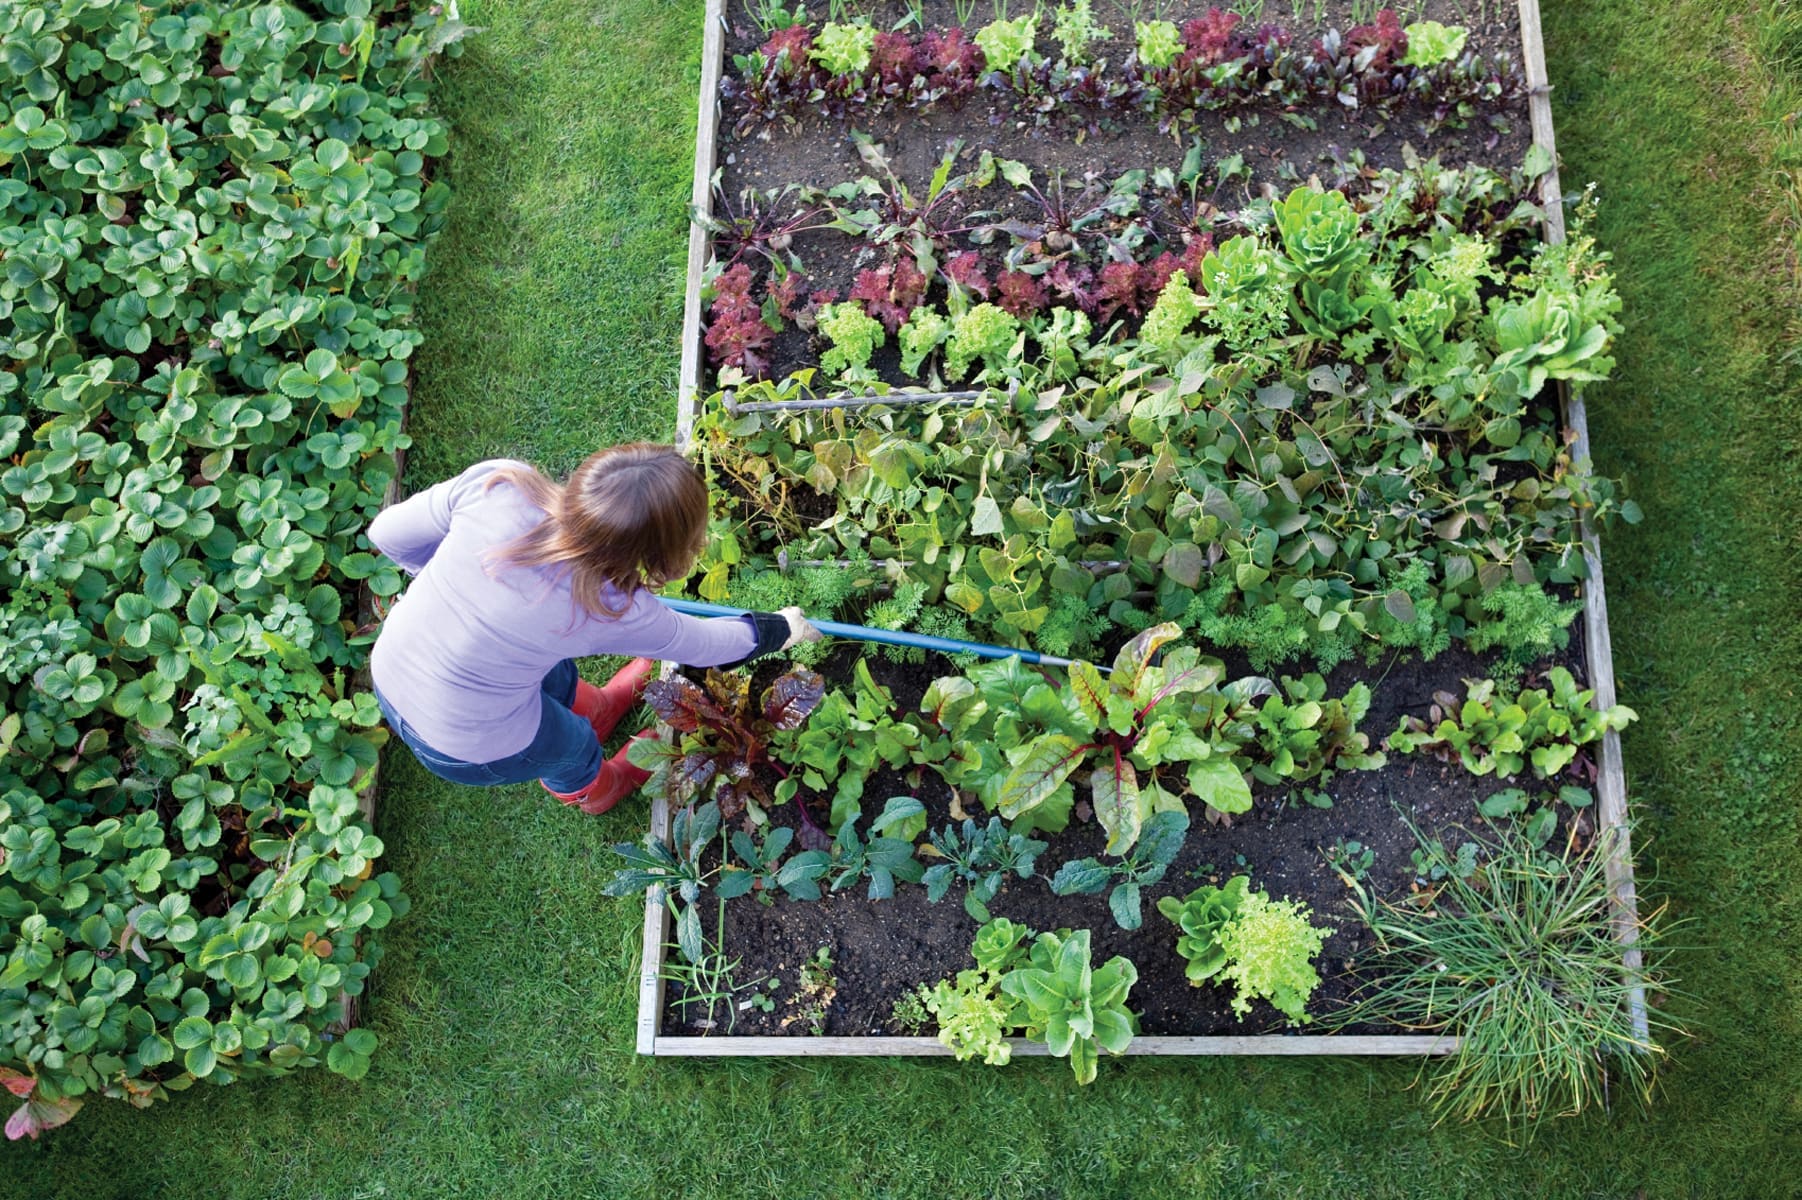 Benefits of gardening